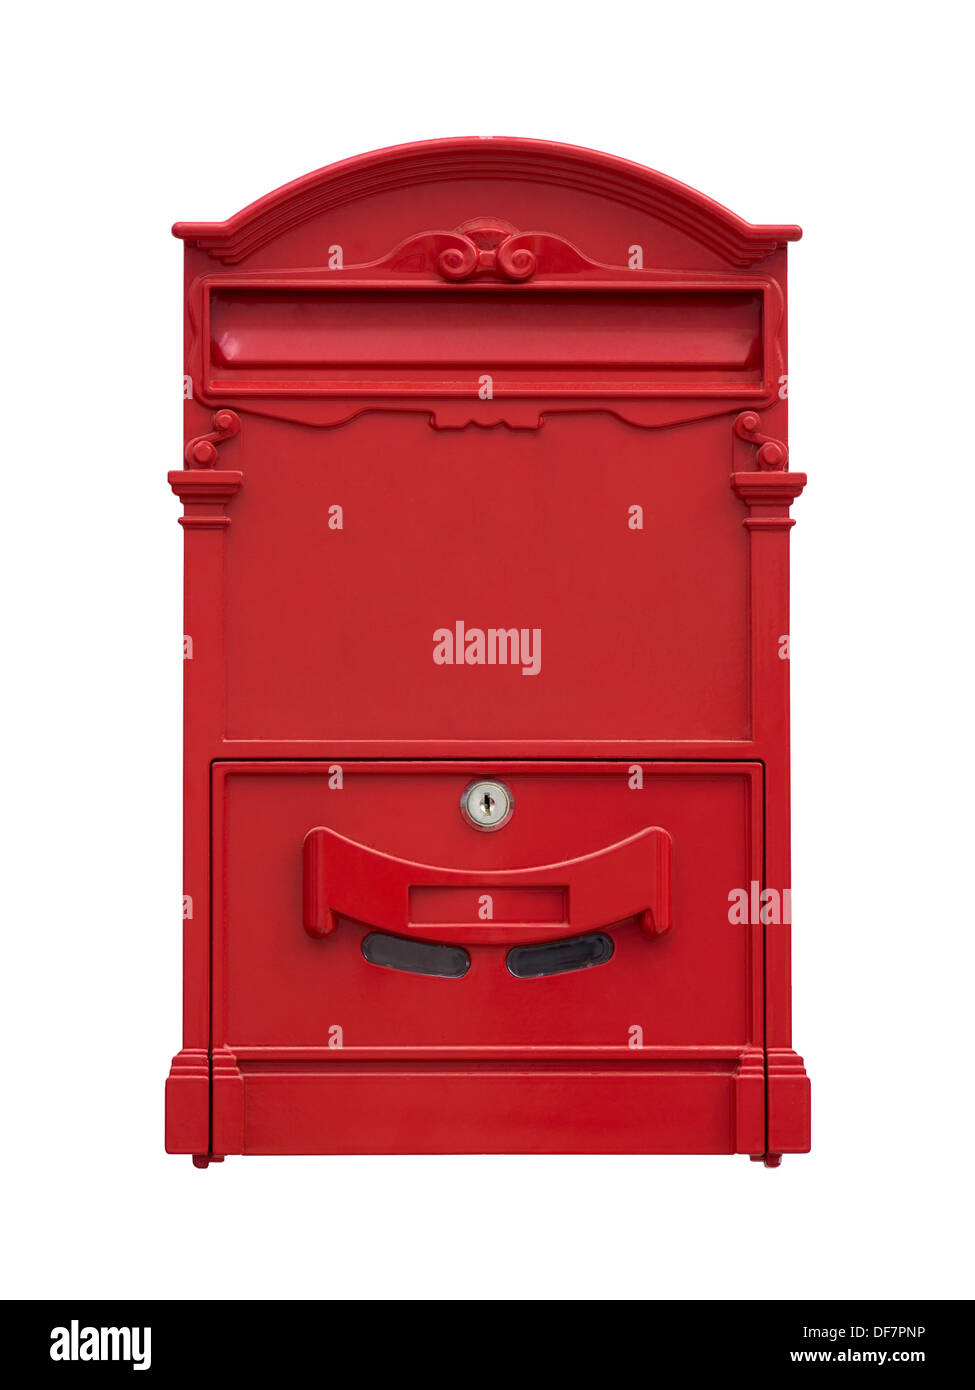 Aislar de mail box rojo sobre un fondo blanco. Foto de stock